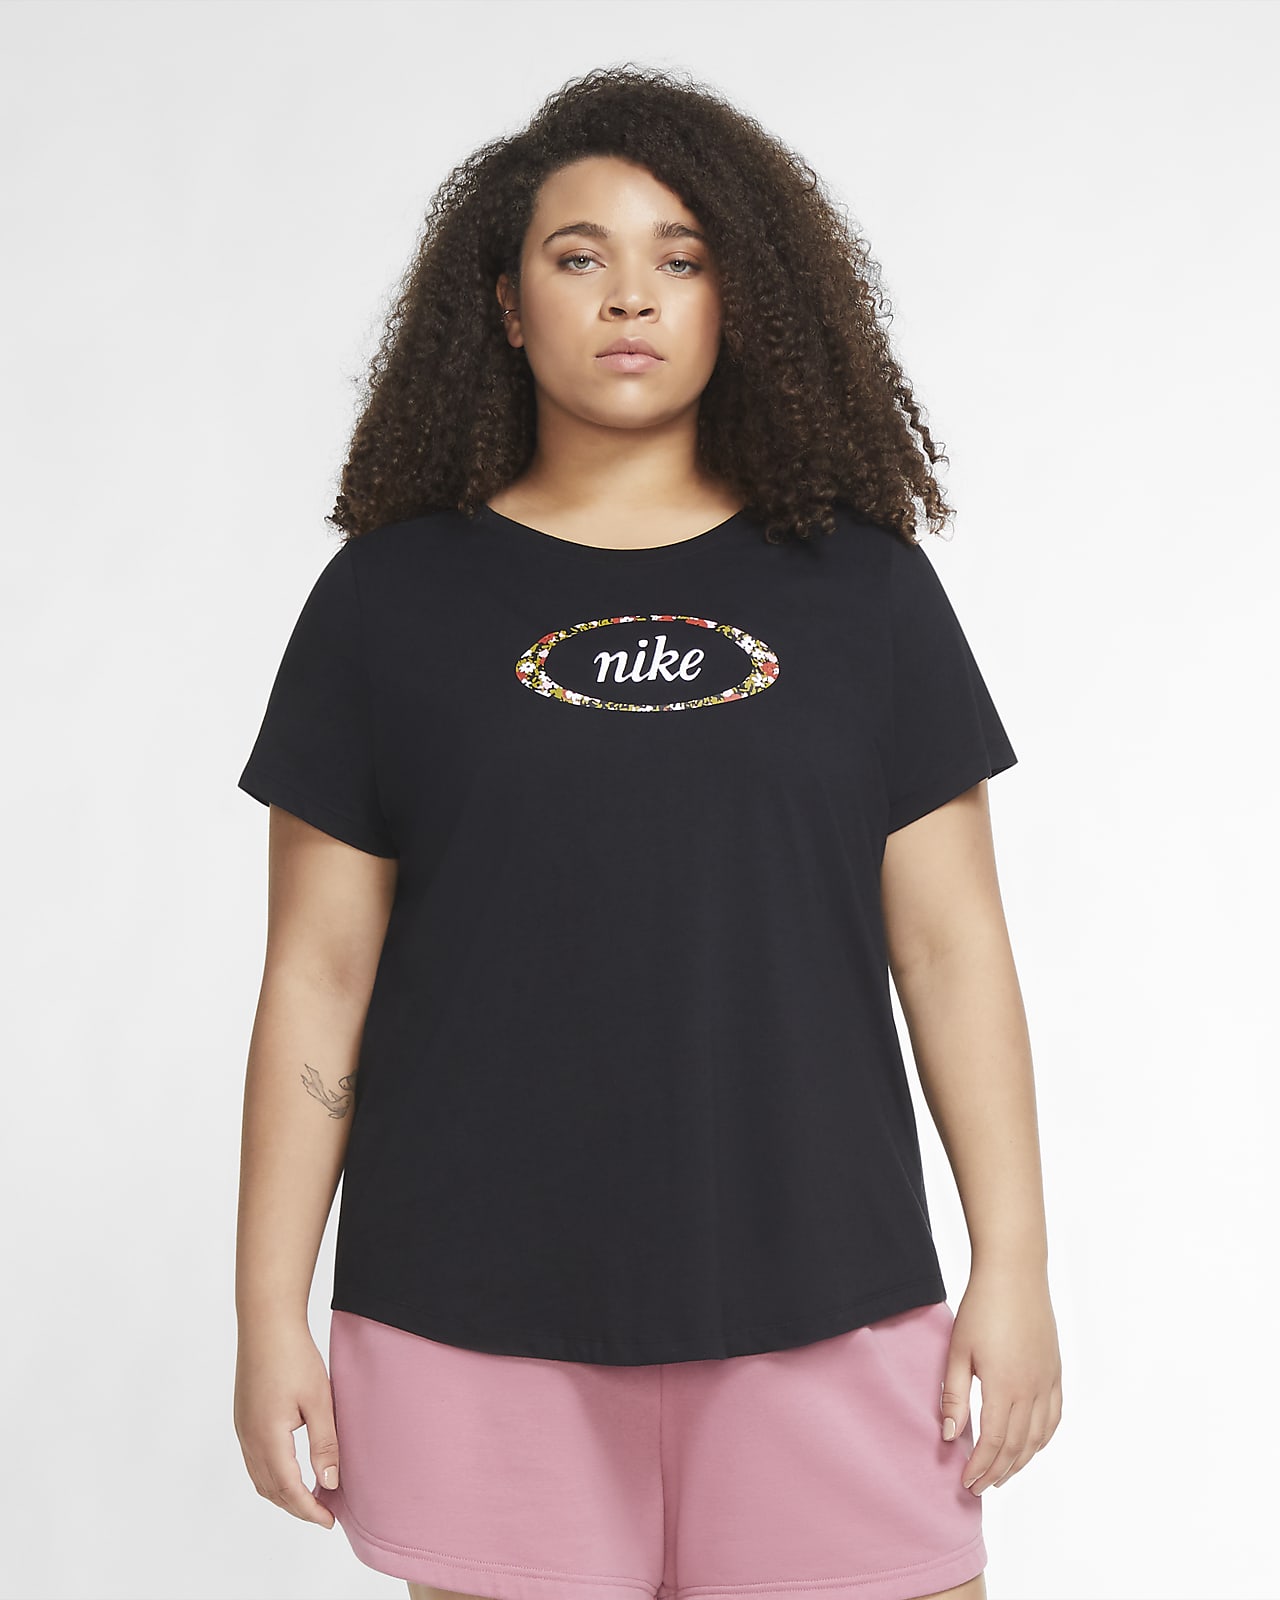 nike plus size women's shirts